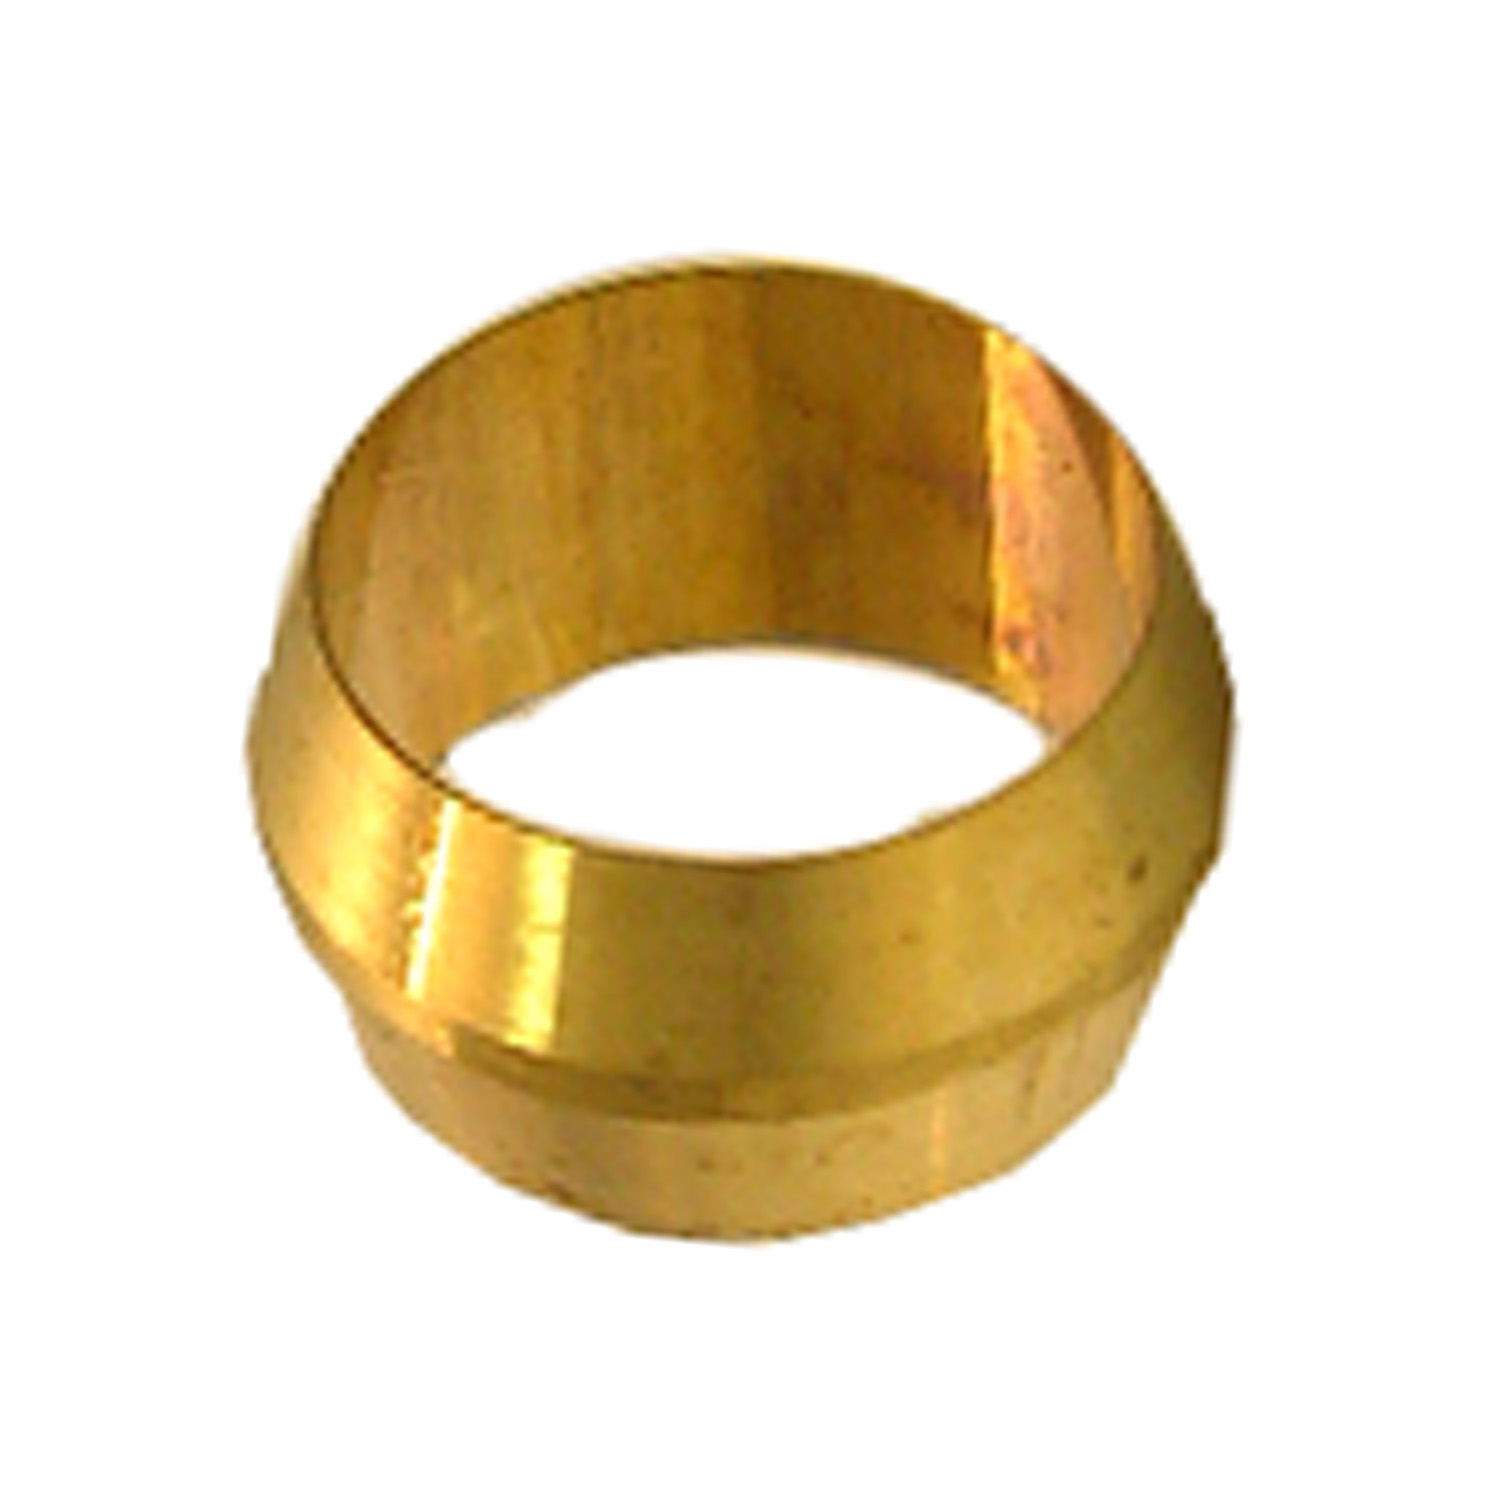 Lasco 17-6011 Pipe Sleeve, 1/4 in Compression, Brass, 2/PK